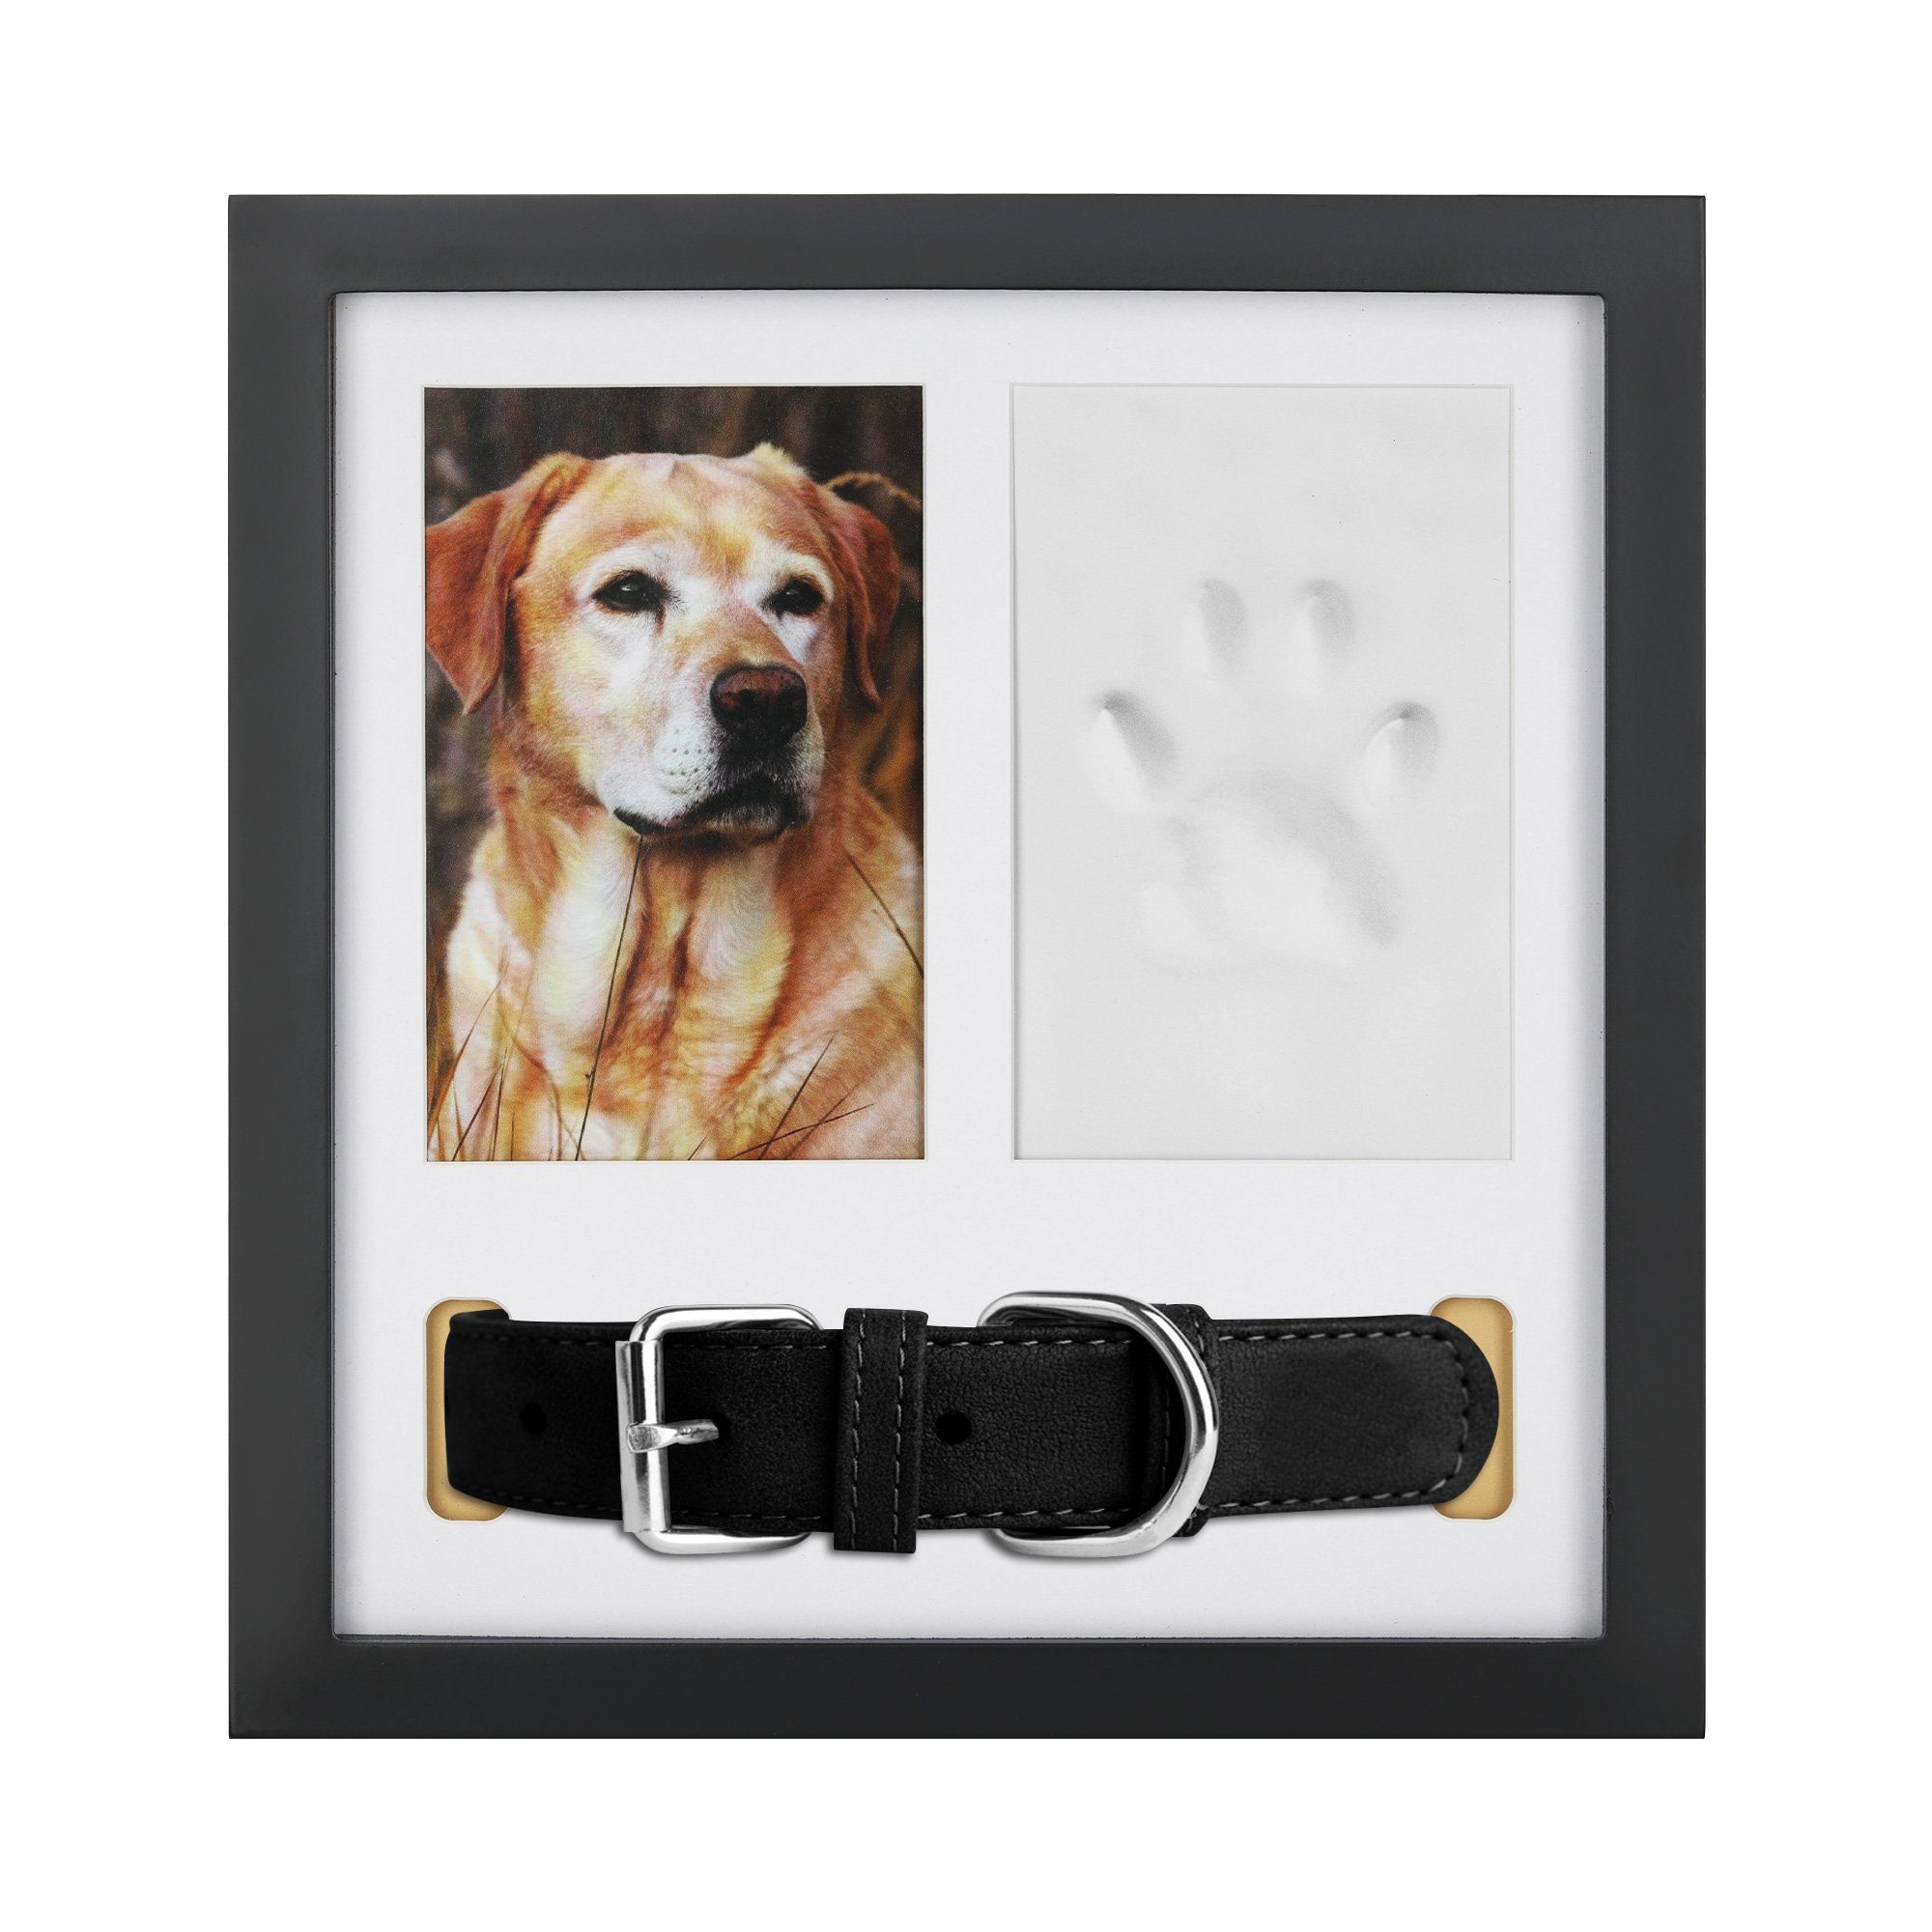 Navaris Bilderrahmen zum Basteln 3in1 Pfotenabdruck Set Hund - Foto Halsband Hundepfoten Abdruck | Bilderrahmen